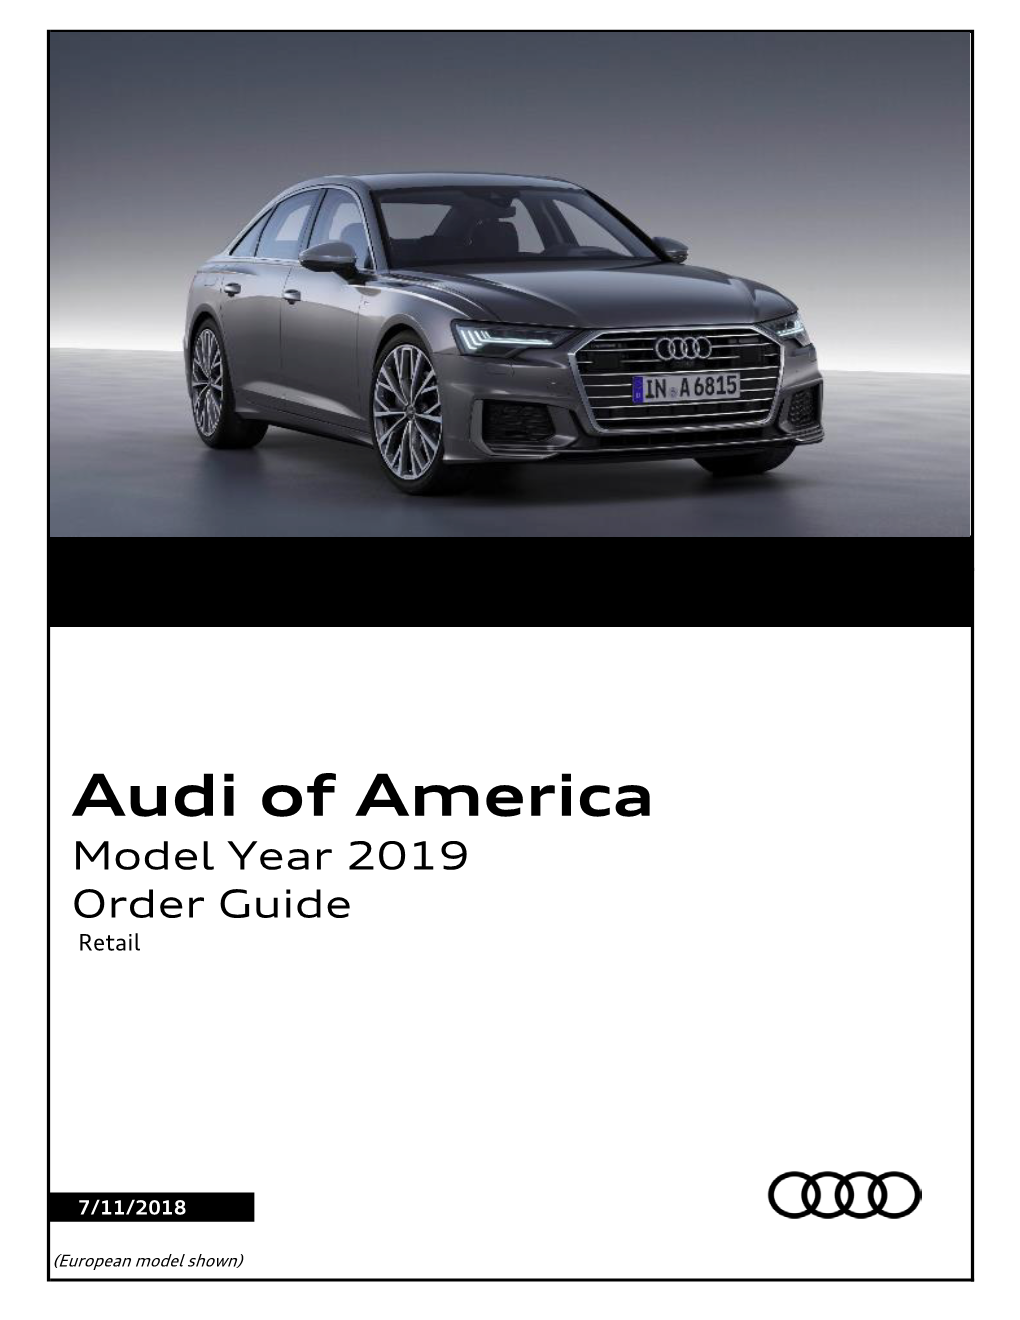 Audi Order Guide 2019 USA (Retail)